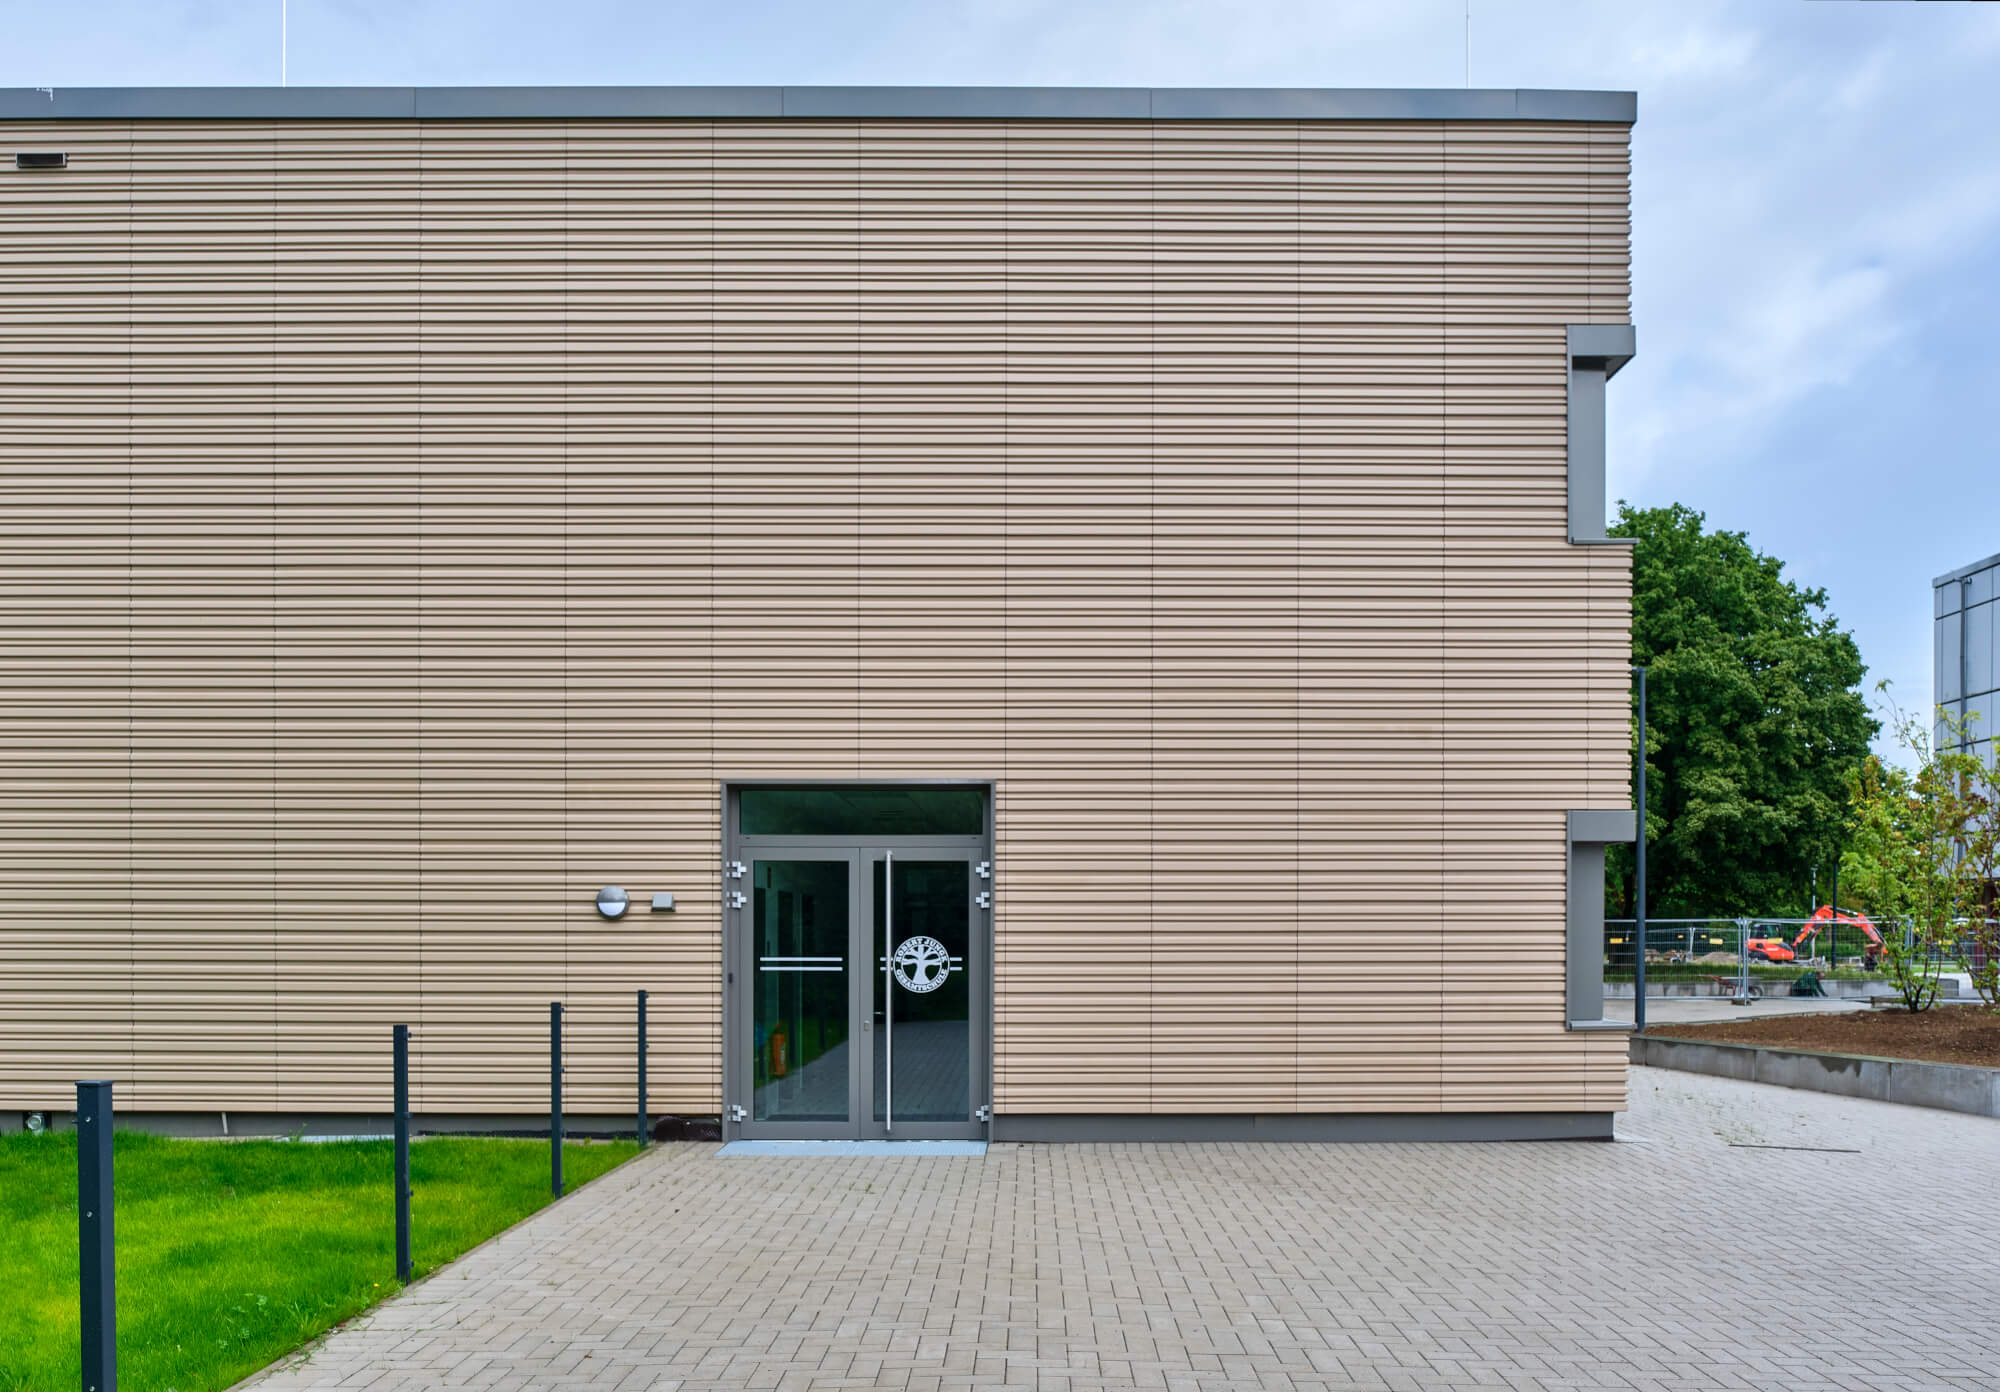 Tonality Referenz Gesamtschule Krefeld - Keramikfassade Frontansicht